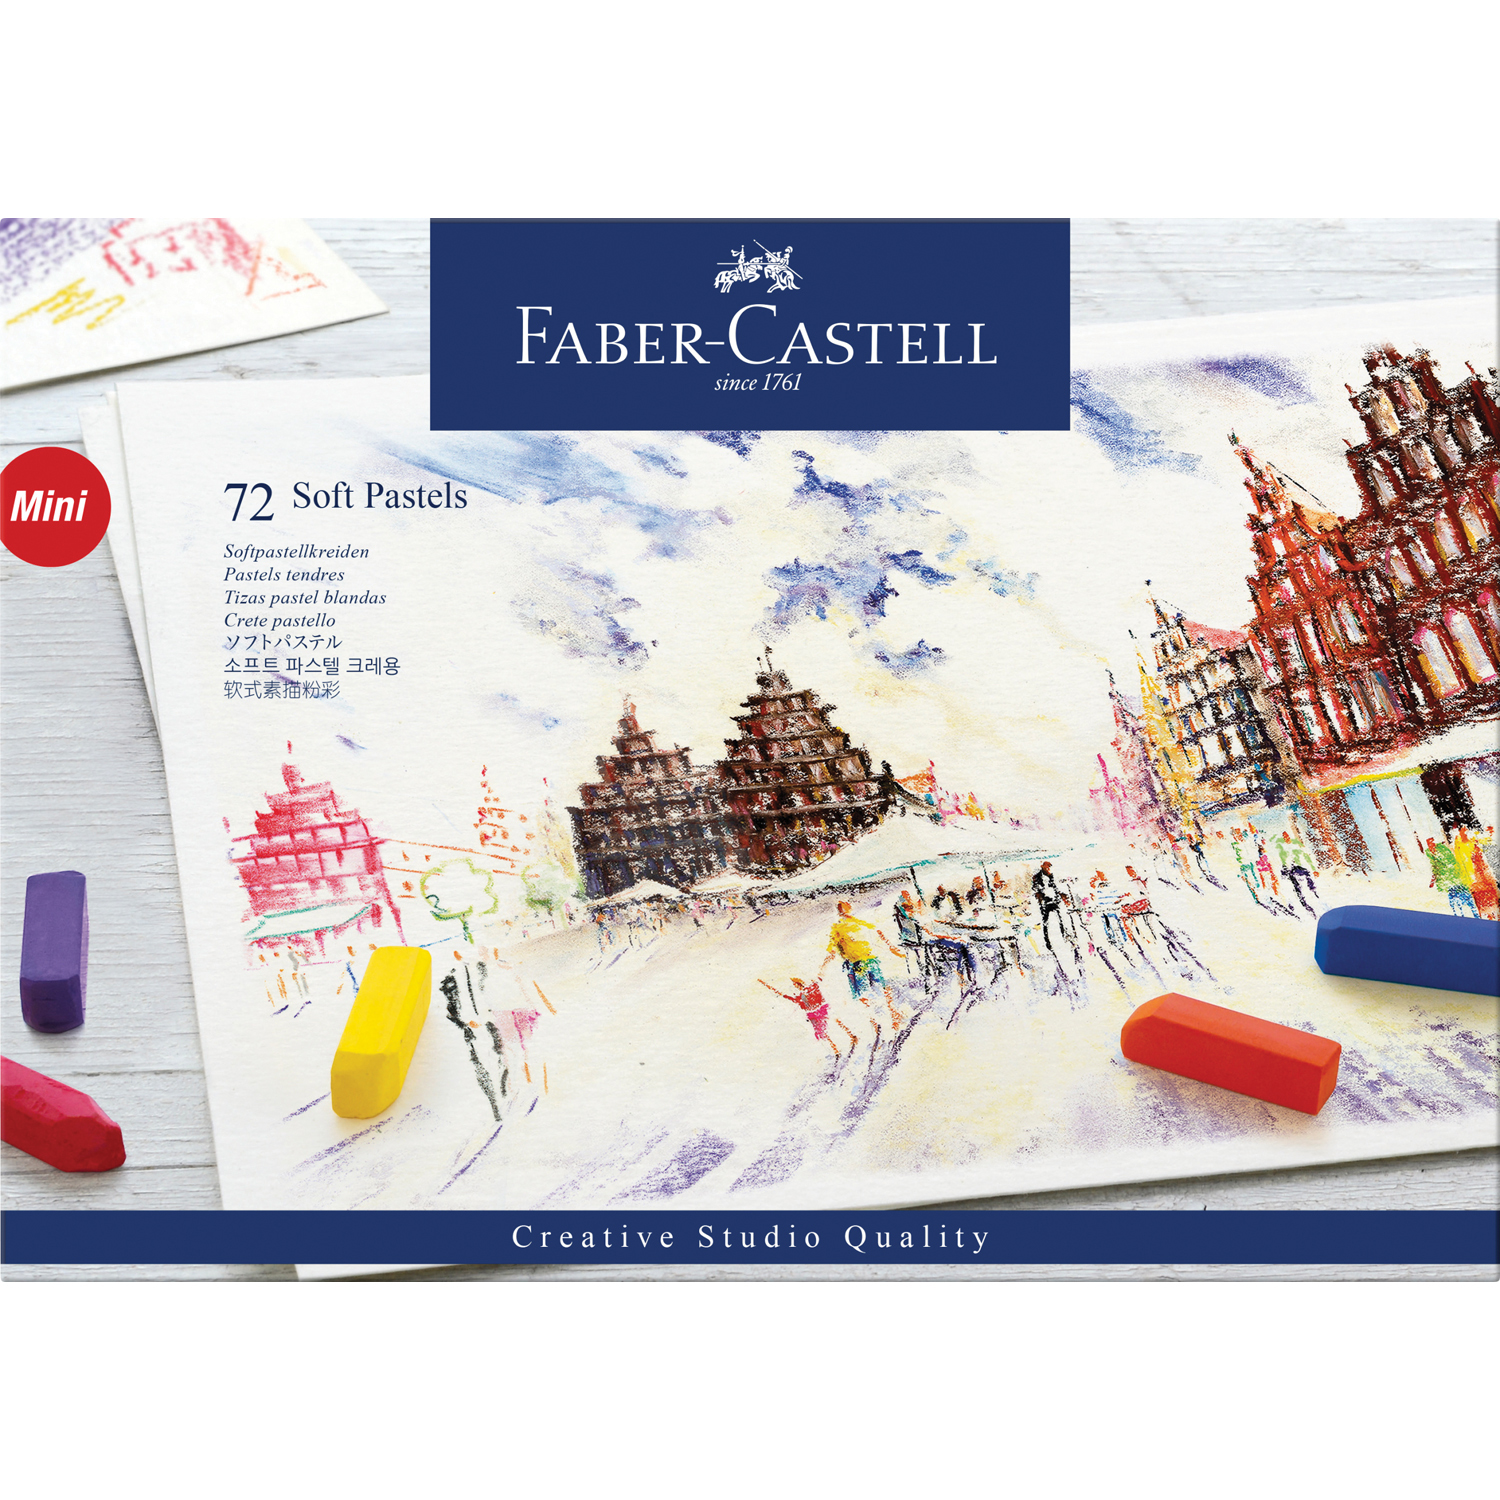 Пастель FABER CASTELL Soft pastels 72 цвета мини - фото 4